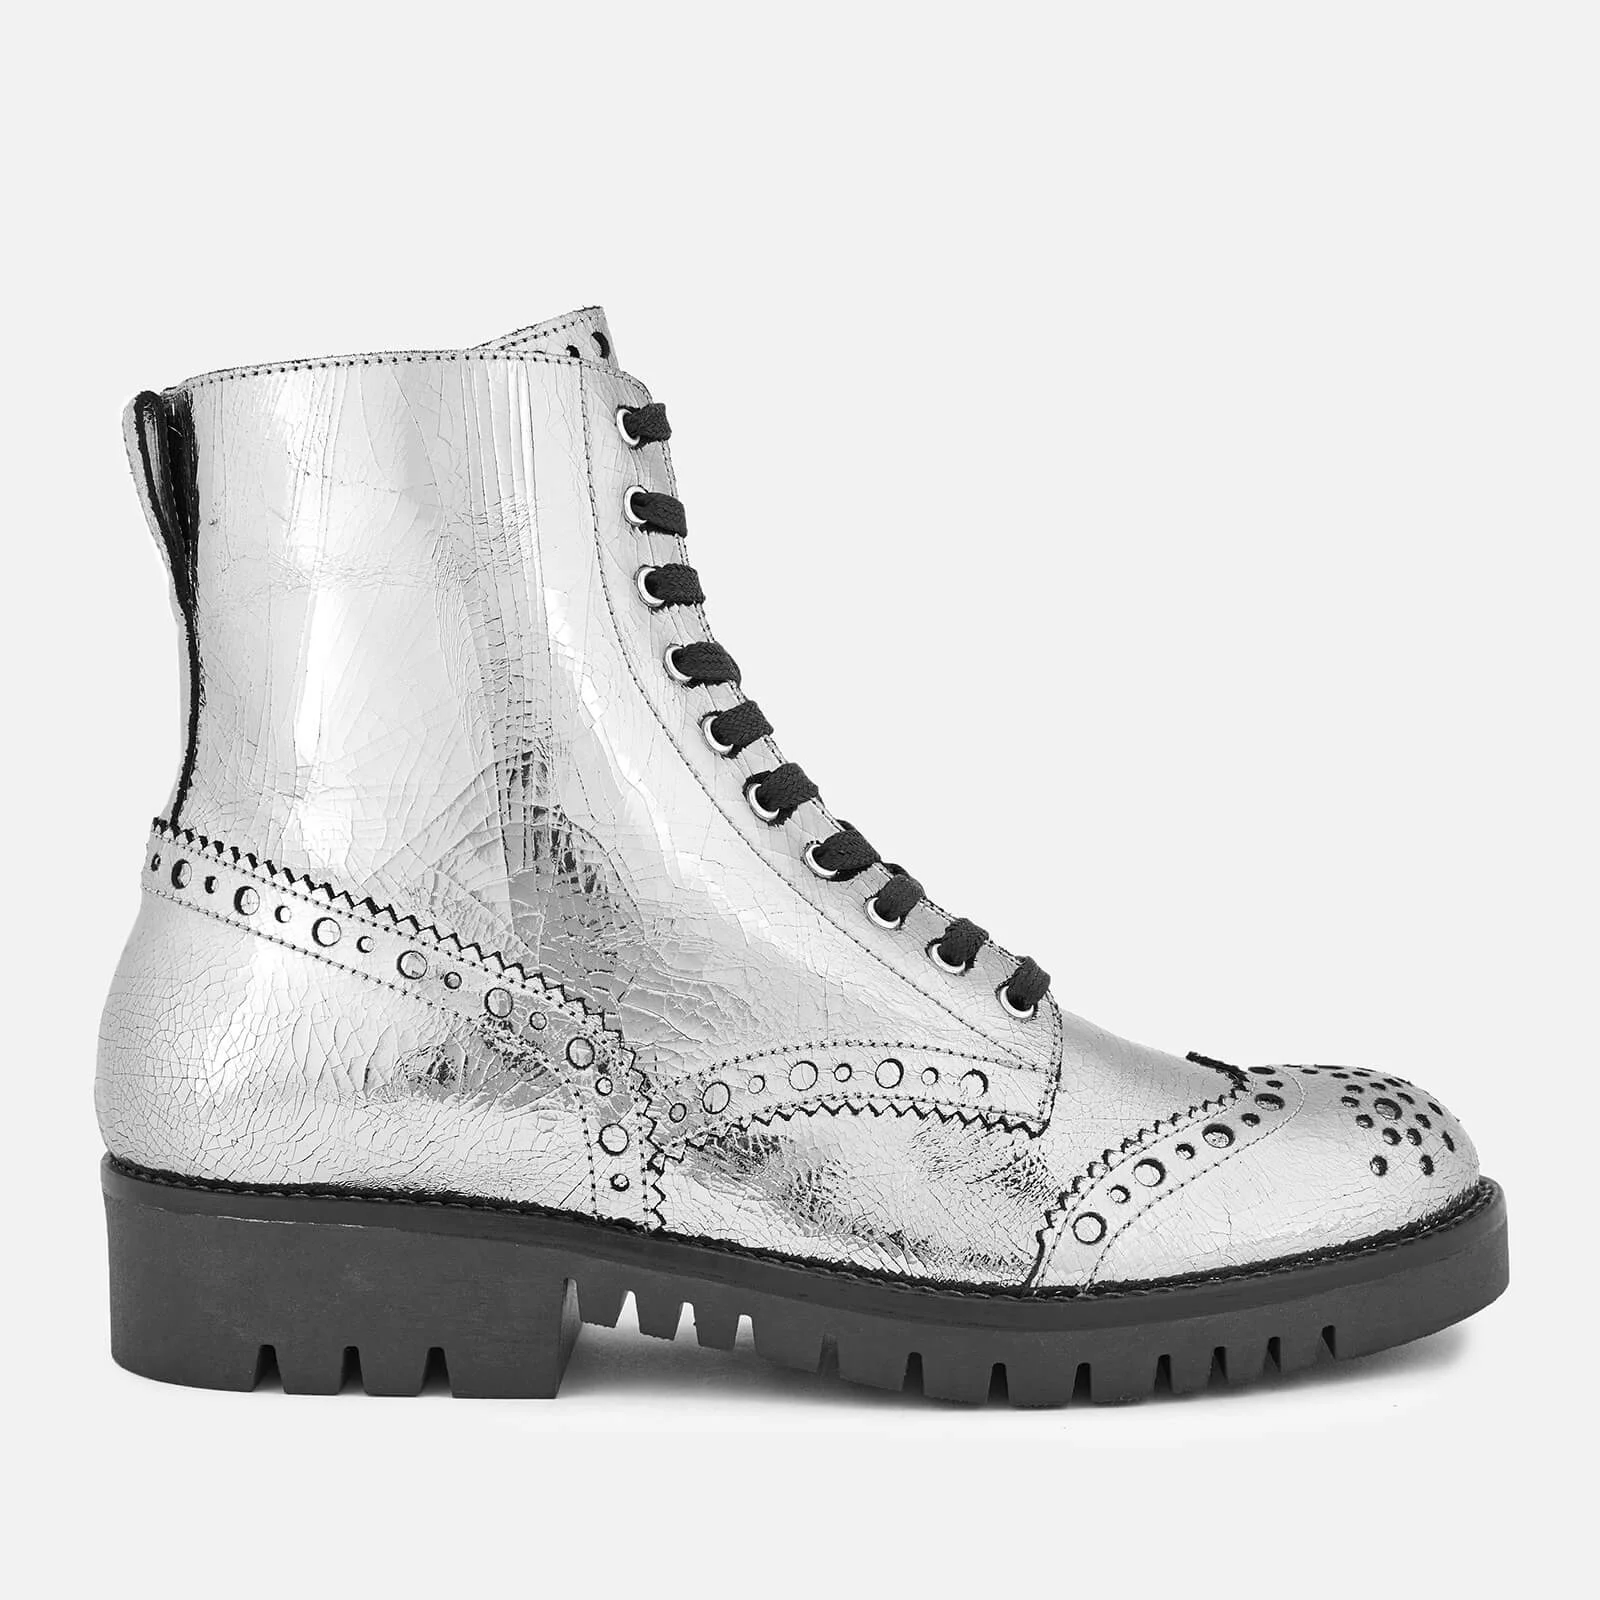 McQ Alexander McQueen Women's Bess Derby Boots - Silver Image 1